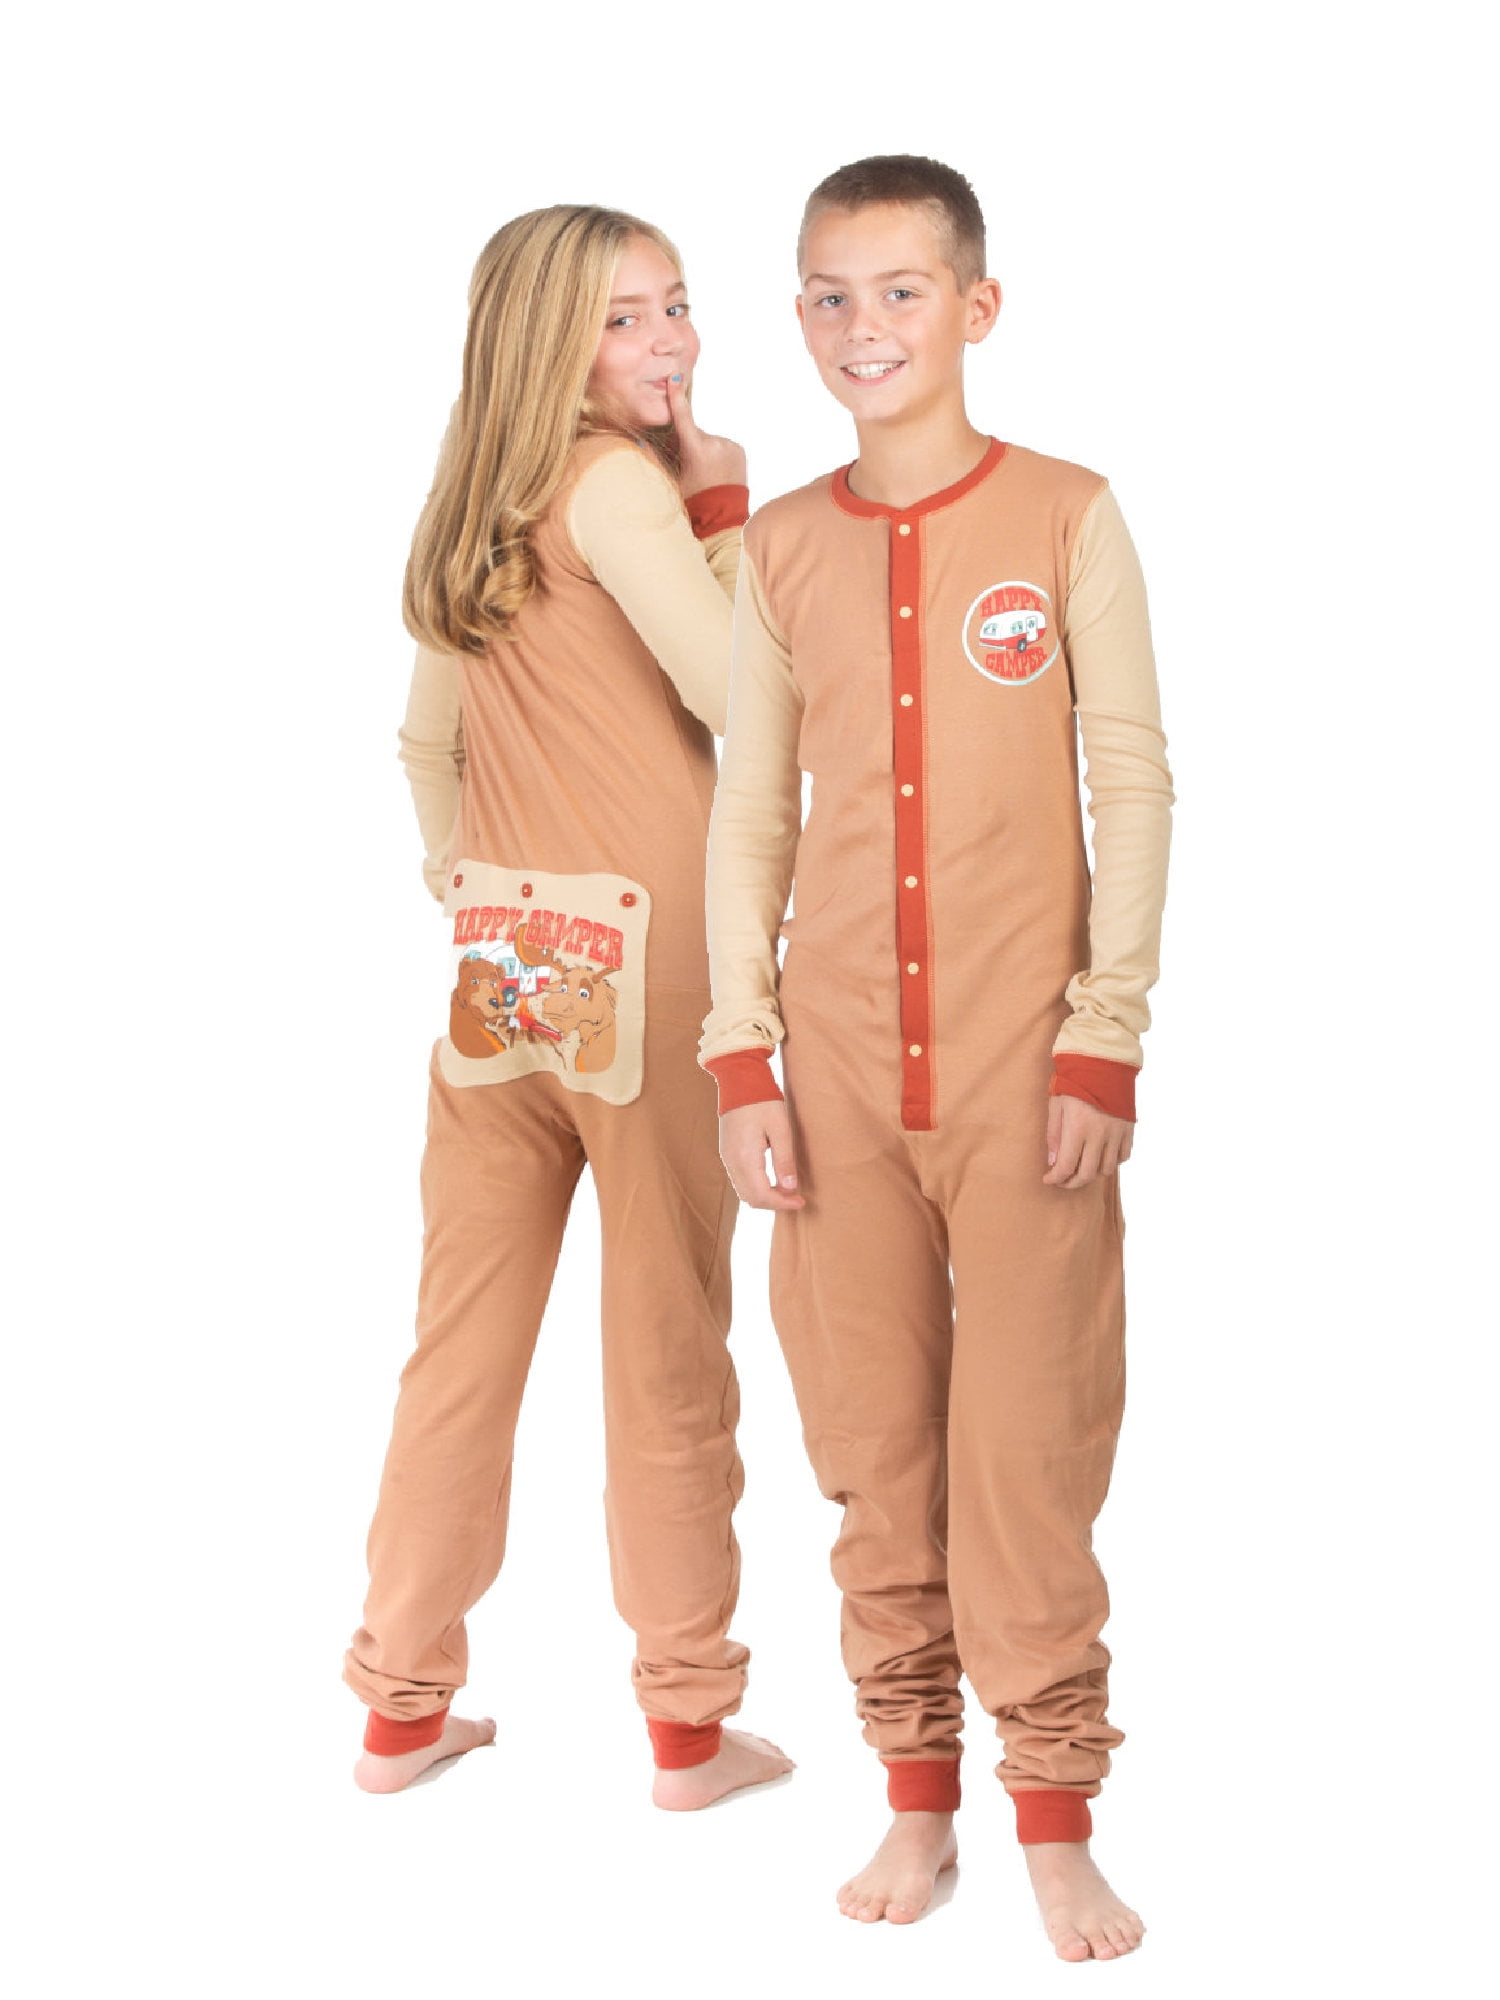 Wasserette Necklet Vermaken Boys & Girls Kid's Union Suit Pajamas HAPPY CAMPER Design On Butt Flap -  Walmart.com